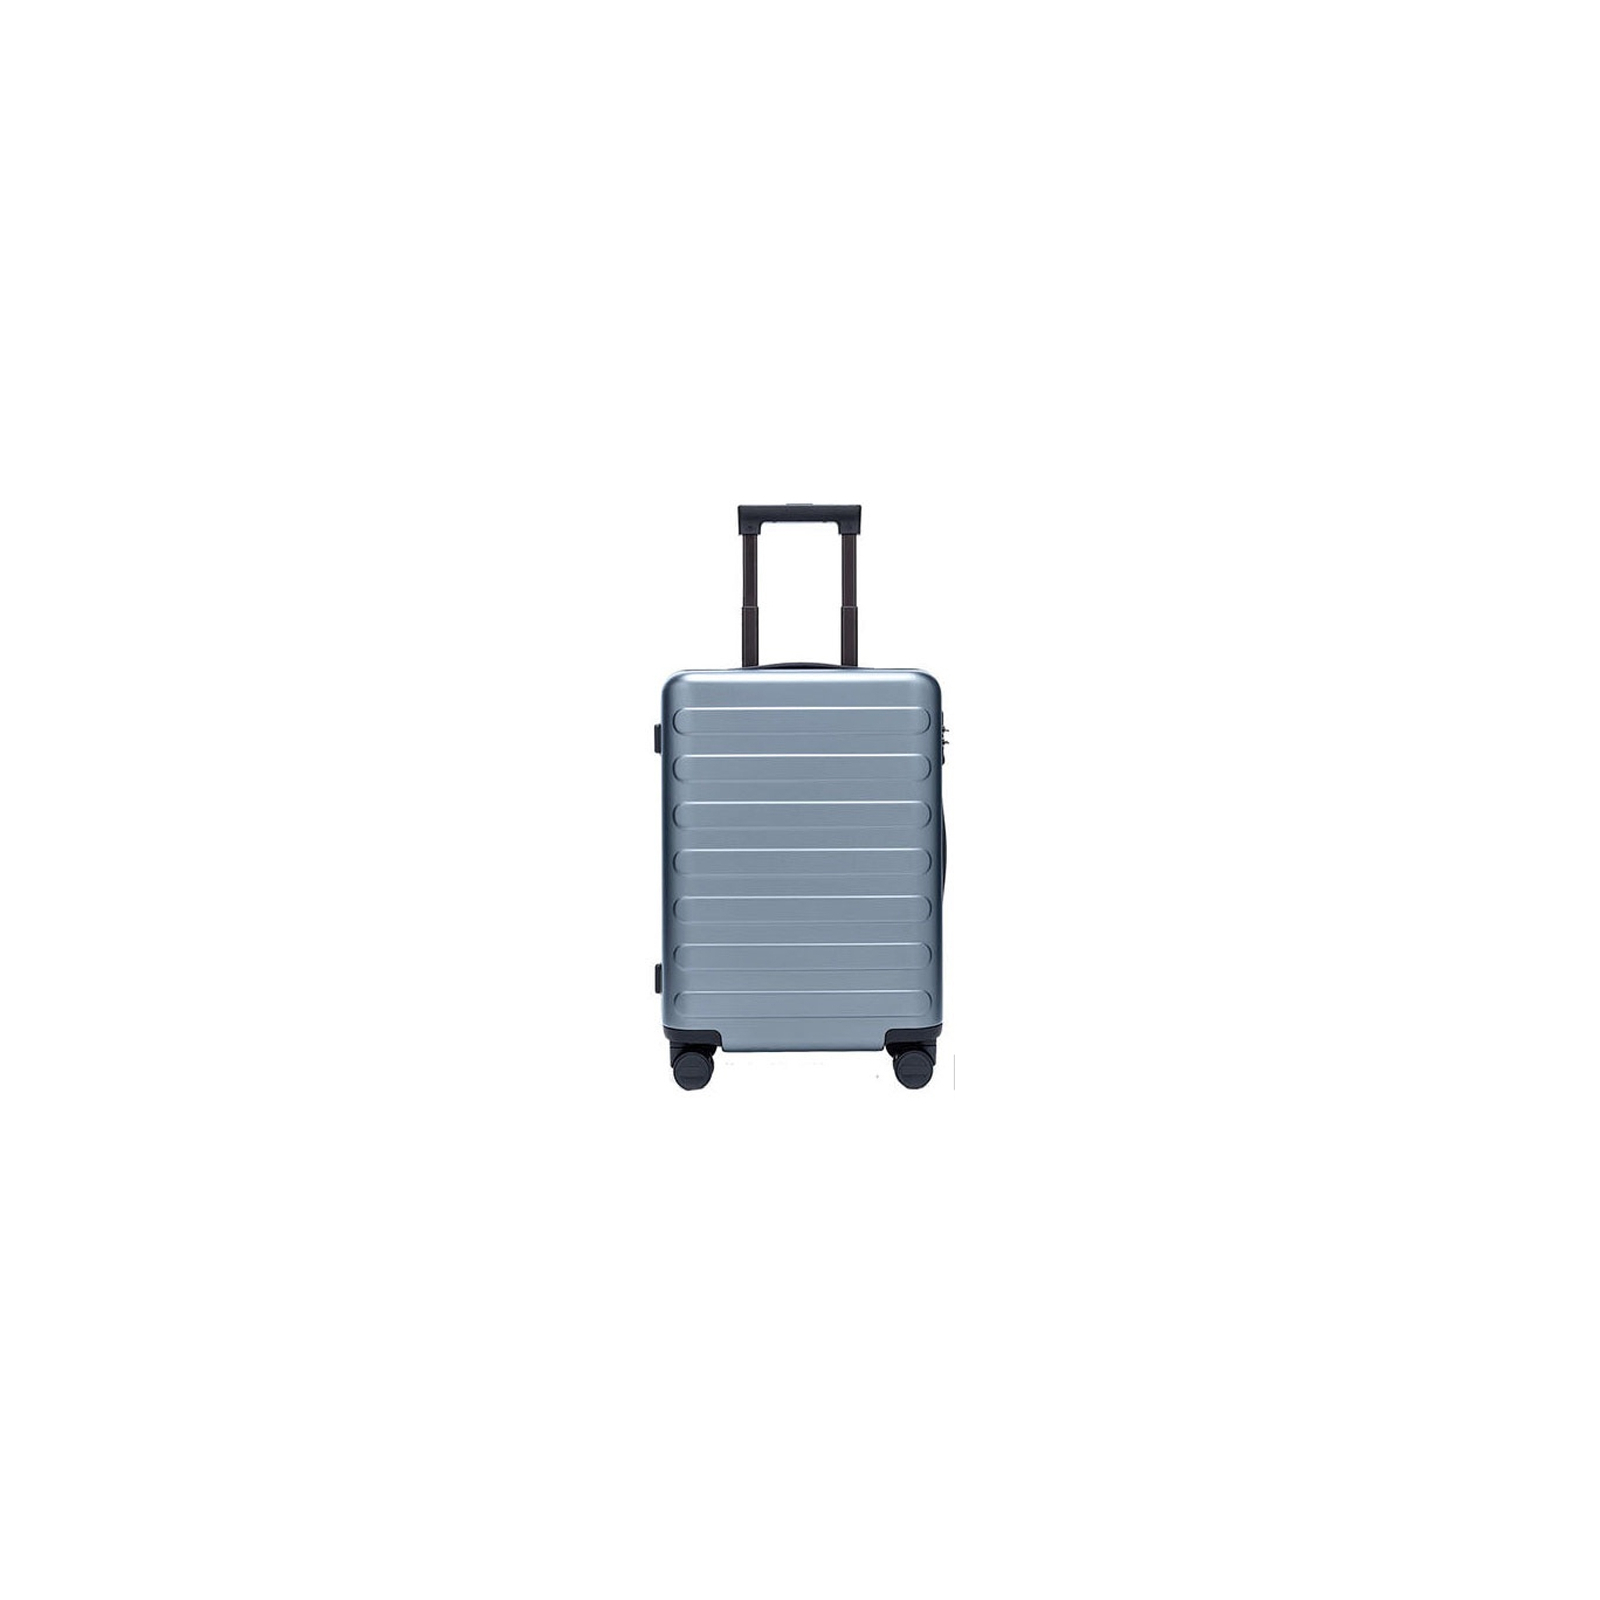 Валіза Xiaomi Ninetygo Business Travel Luggage 20" Red (6970055346696)